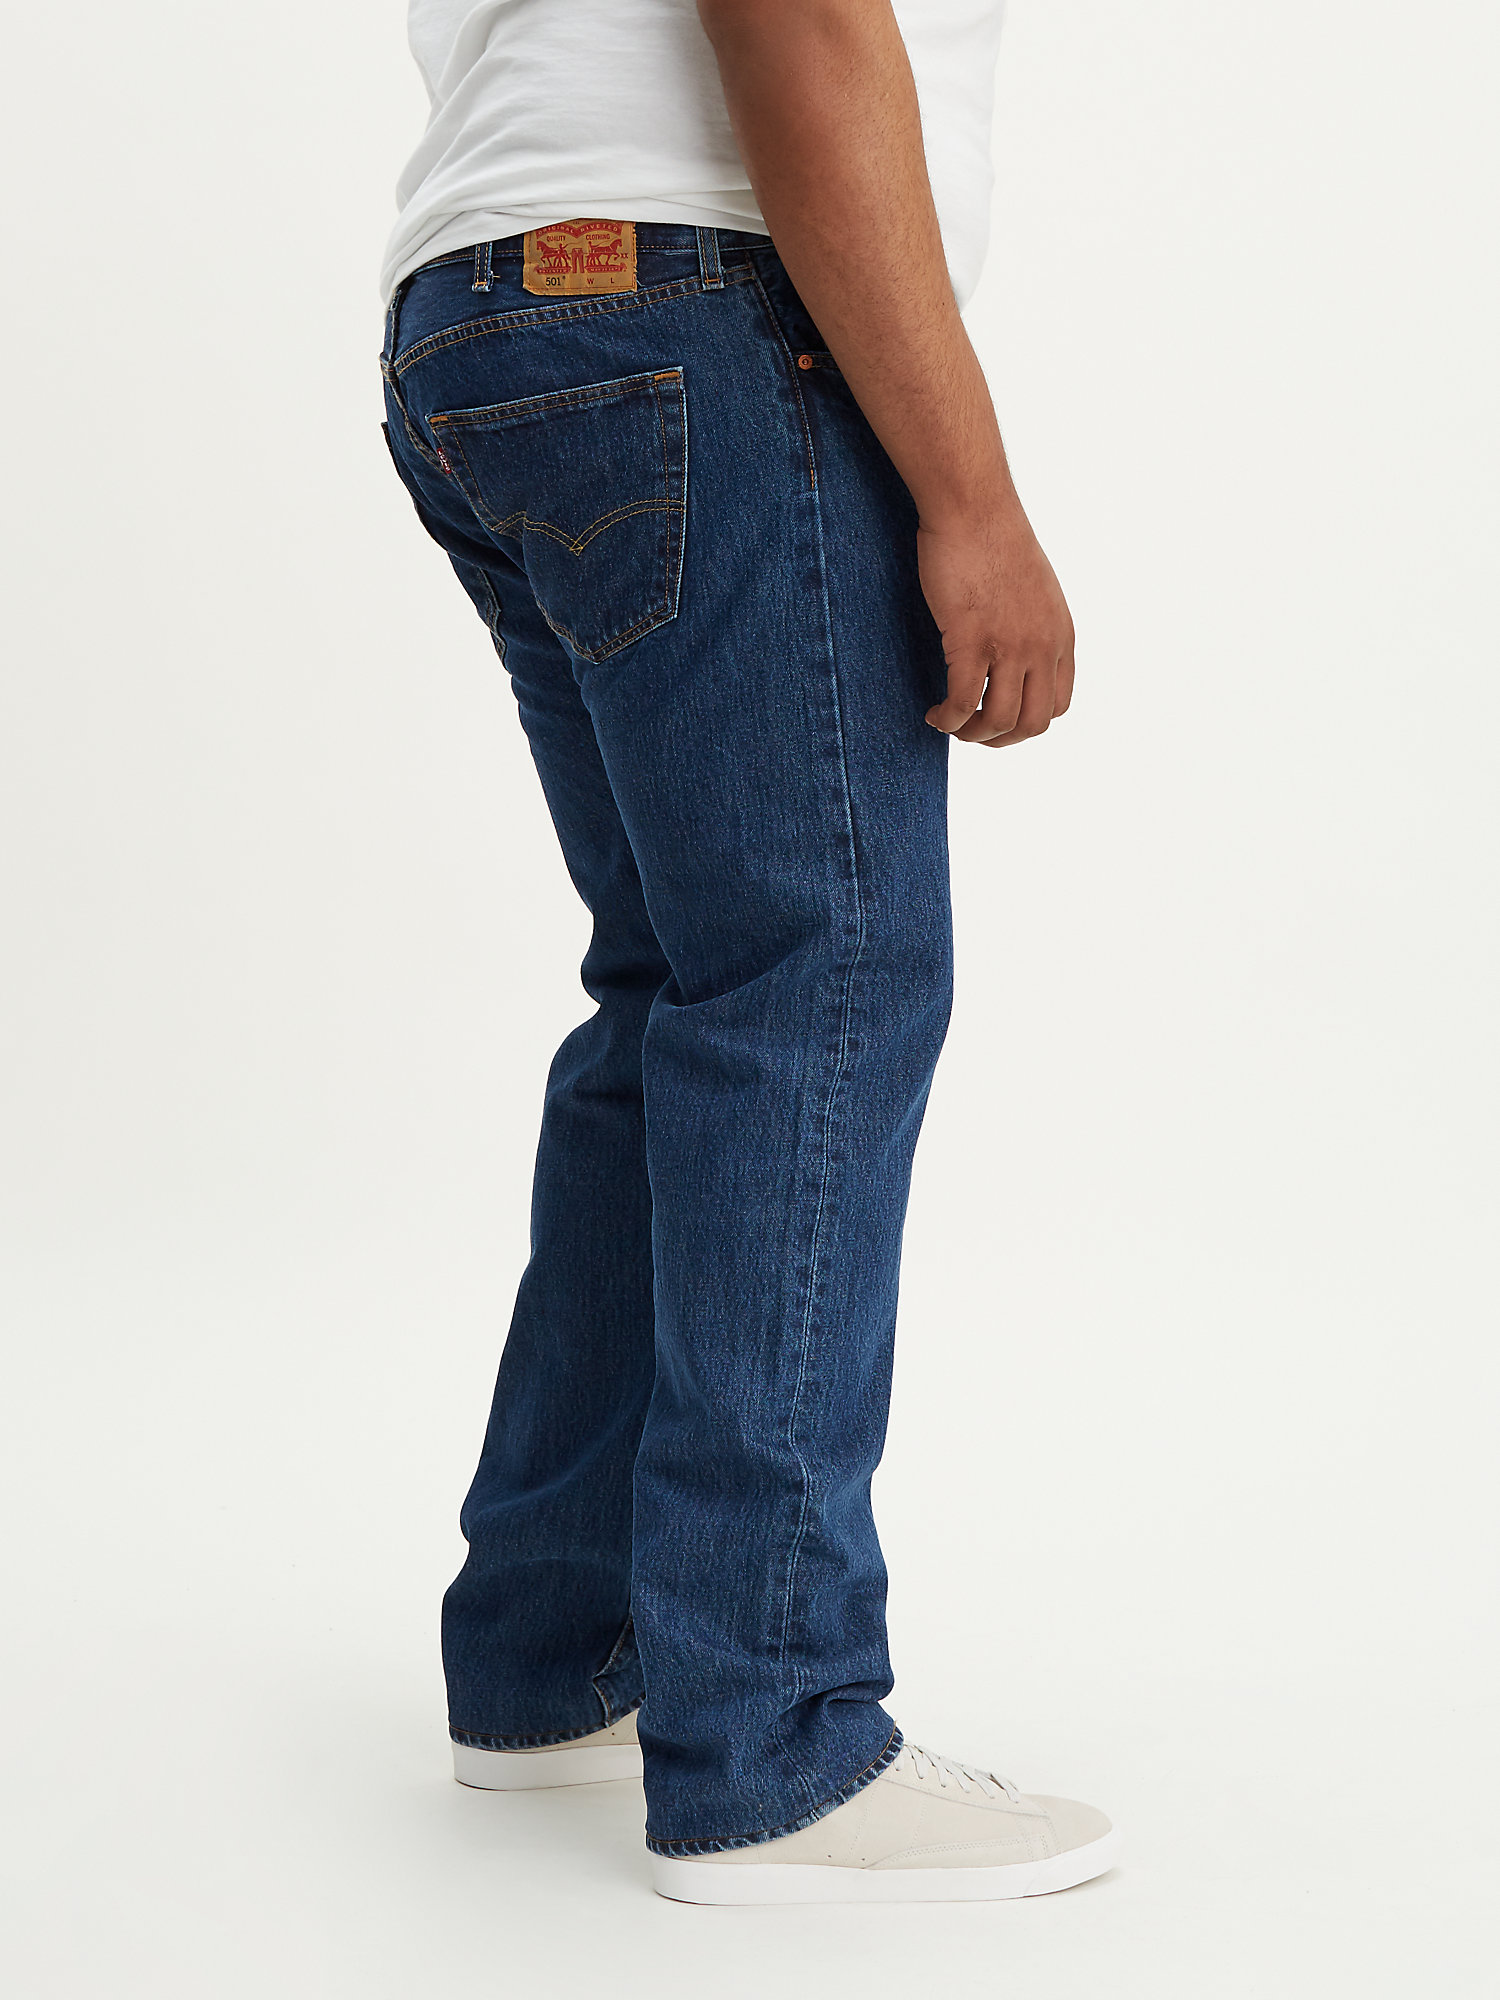 Levi's Men's Big & Tall 501 Original Fit Jeans - image 5 of 6